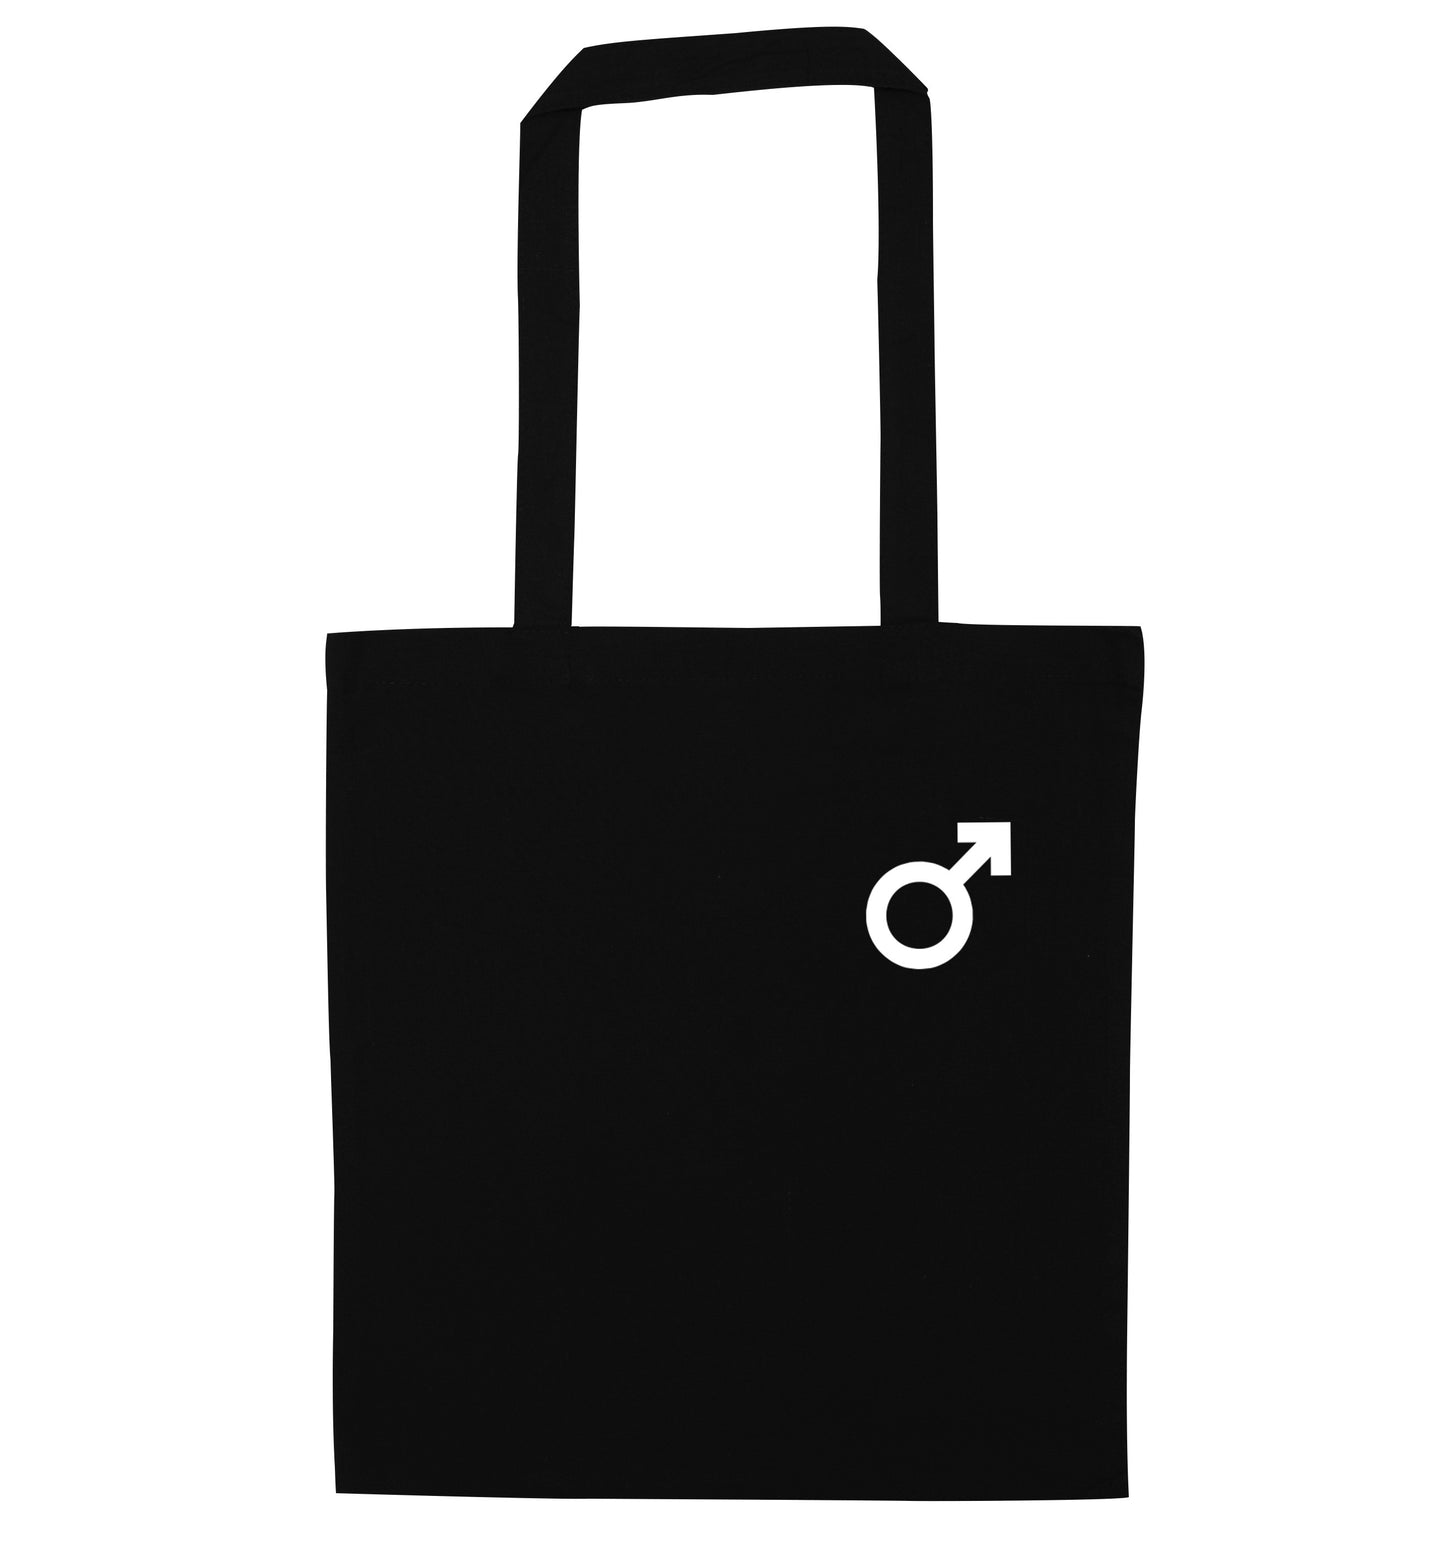 Male symbol pocket black tote bag